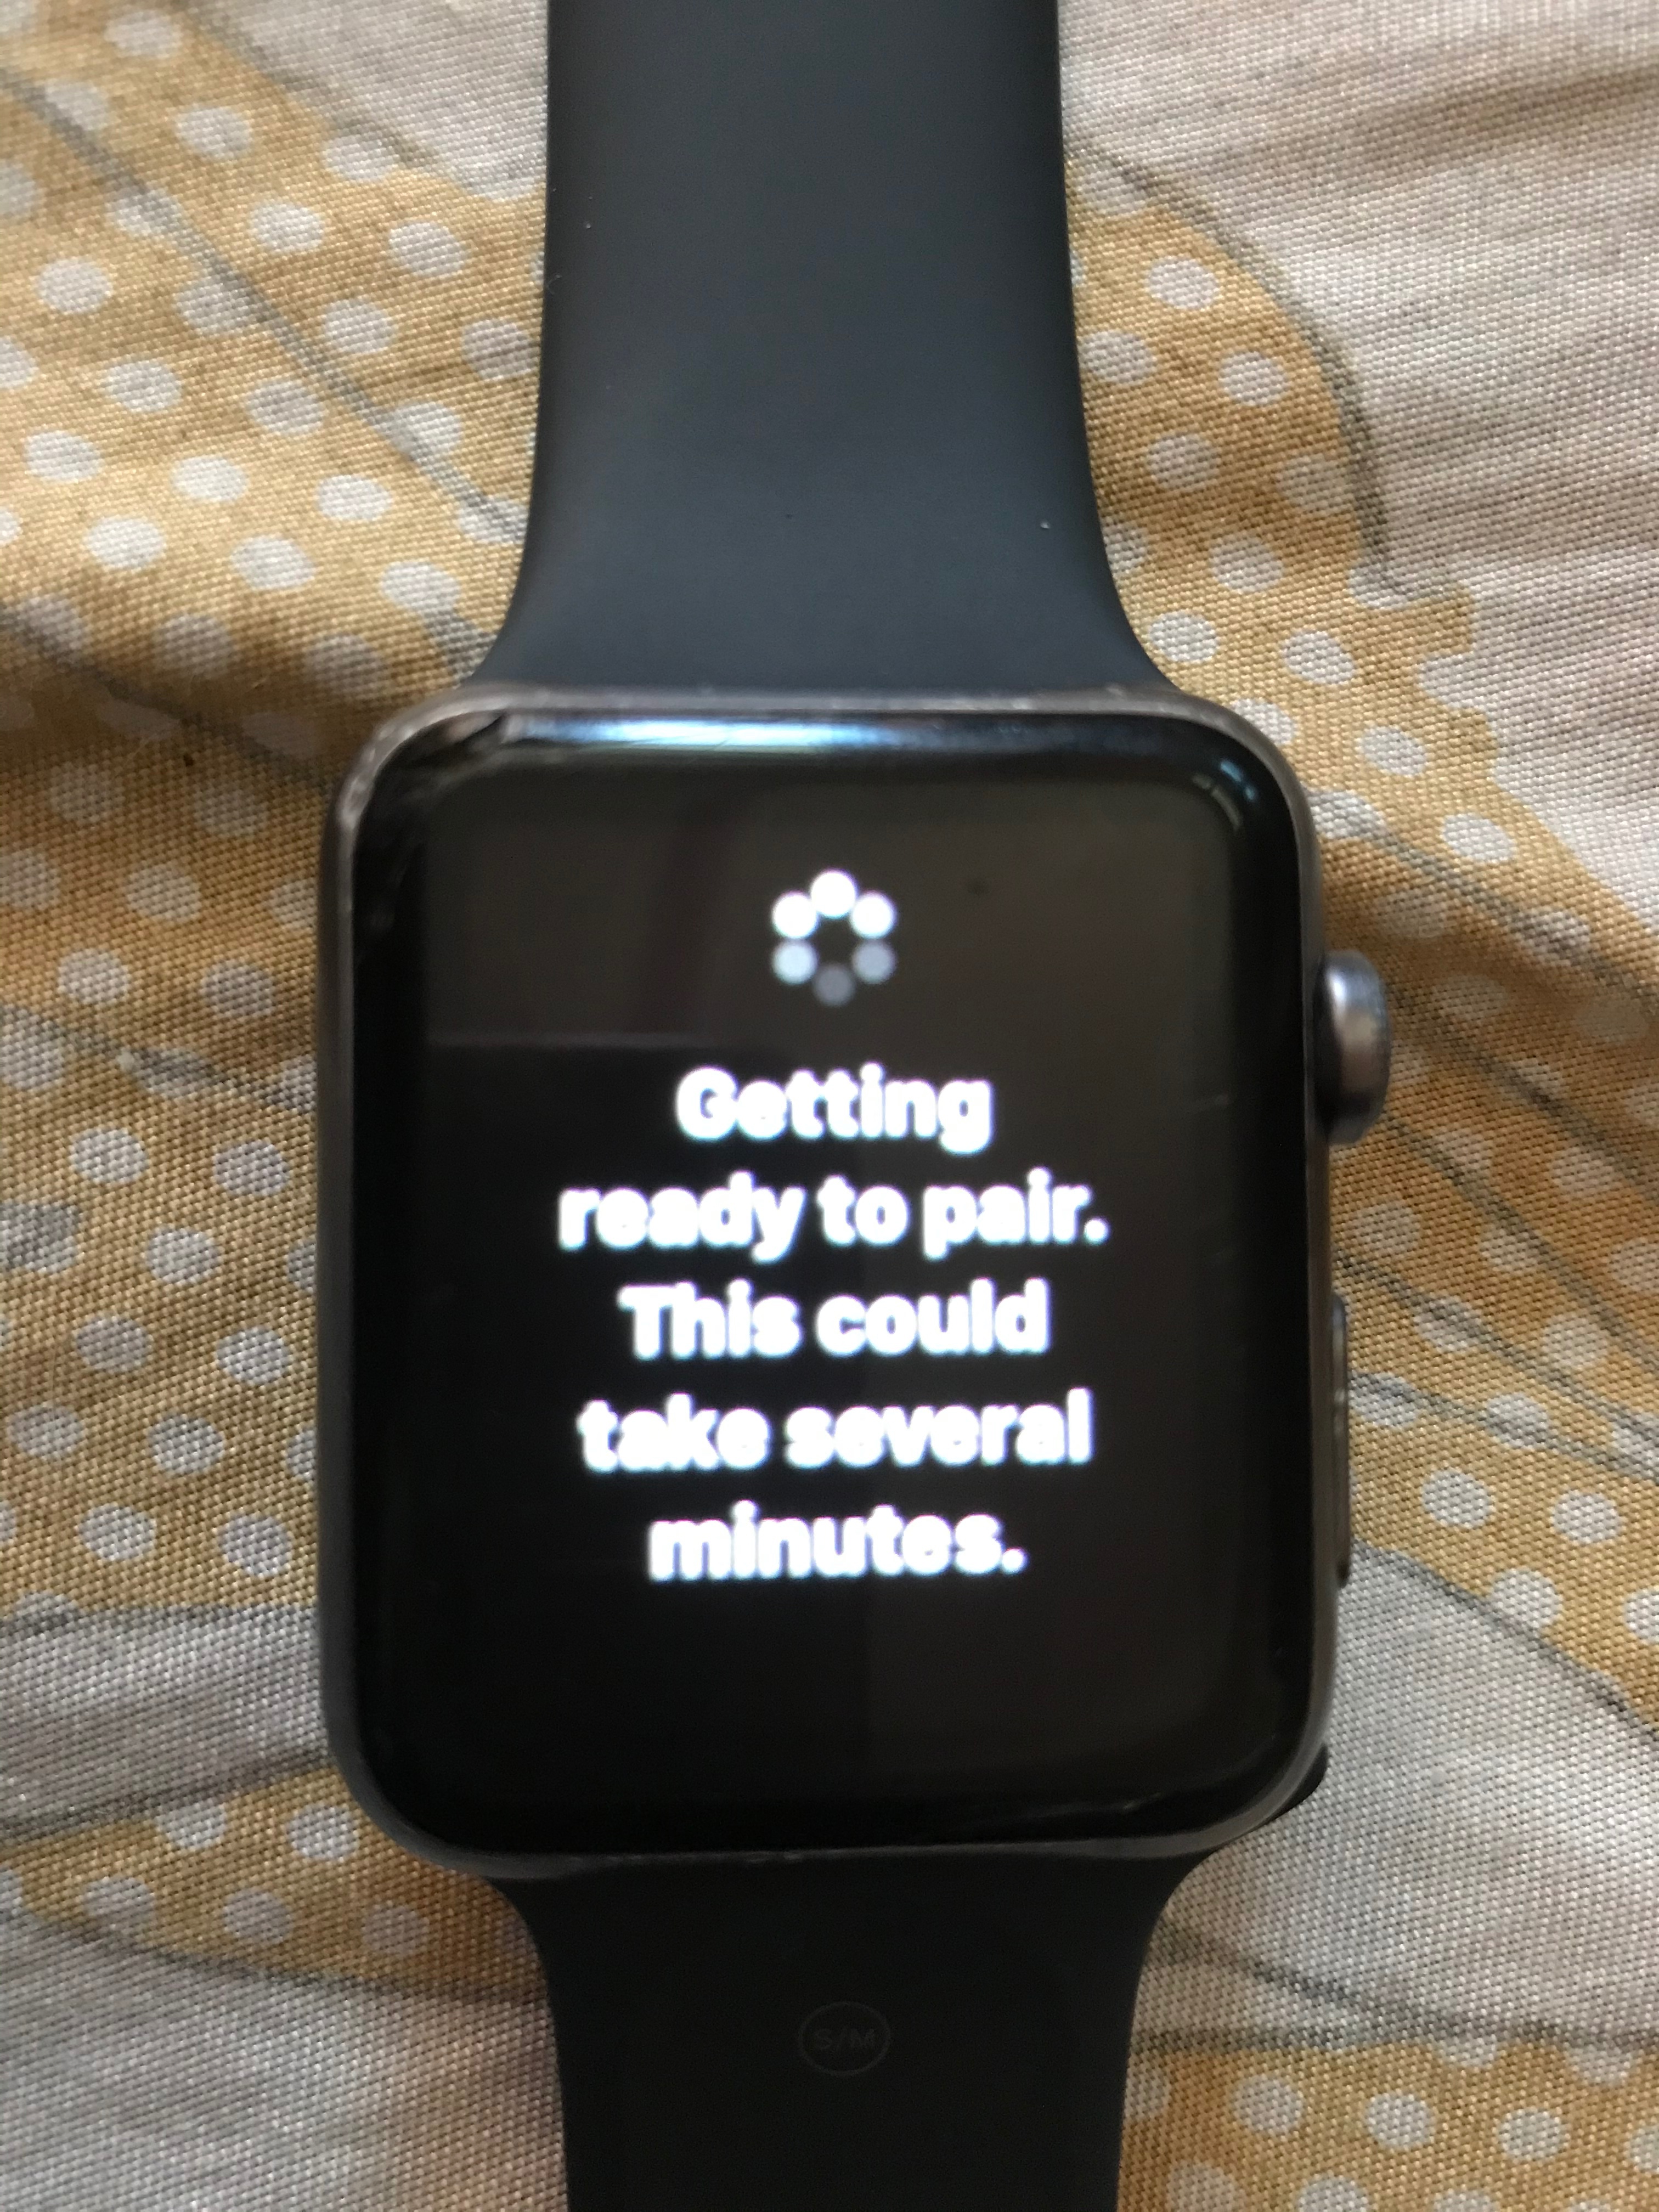 tuin Boekhouding Correct Apple watch stuck on pairing mode (QR SCA… - Apple Community